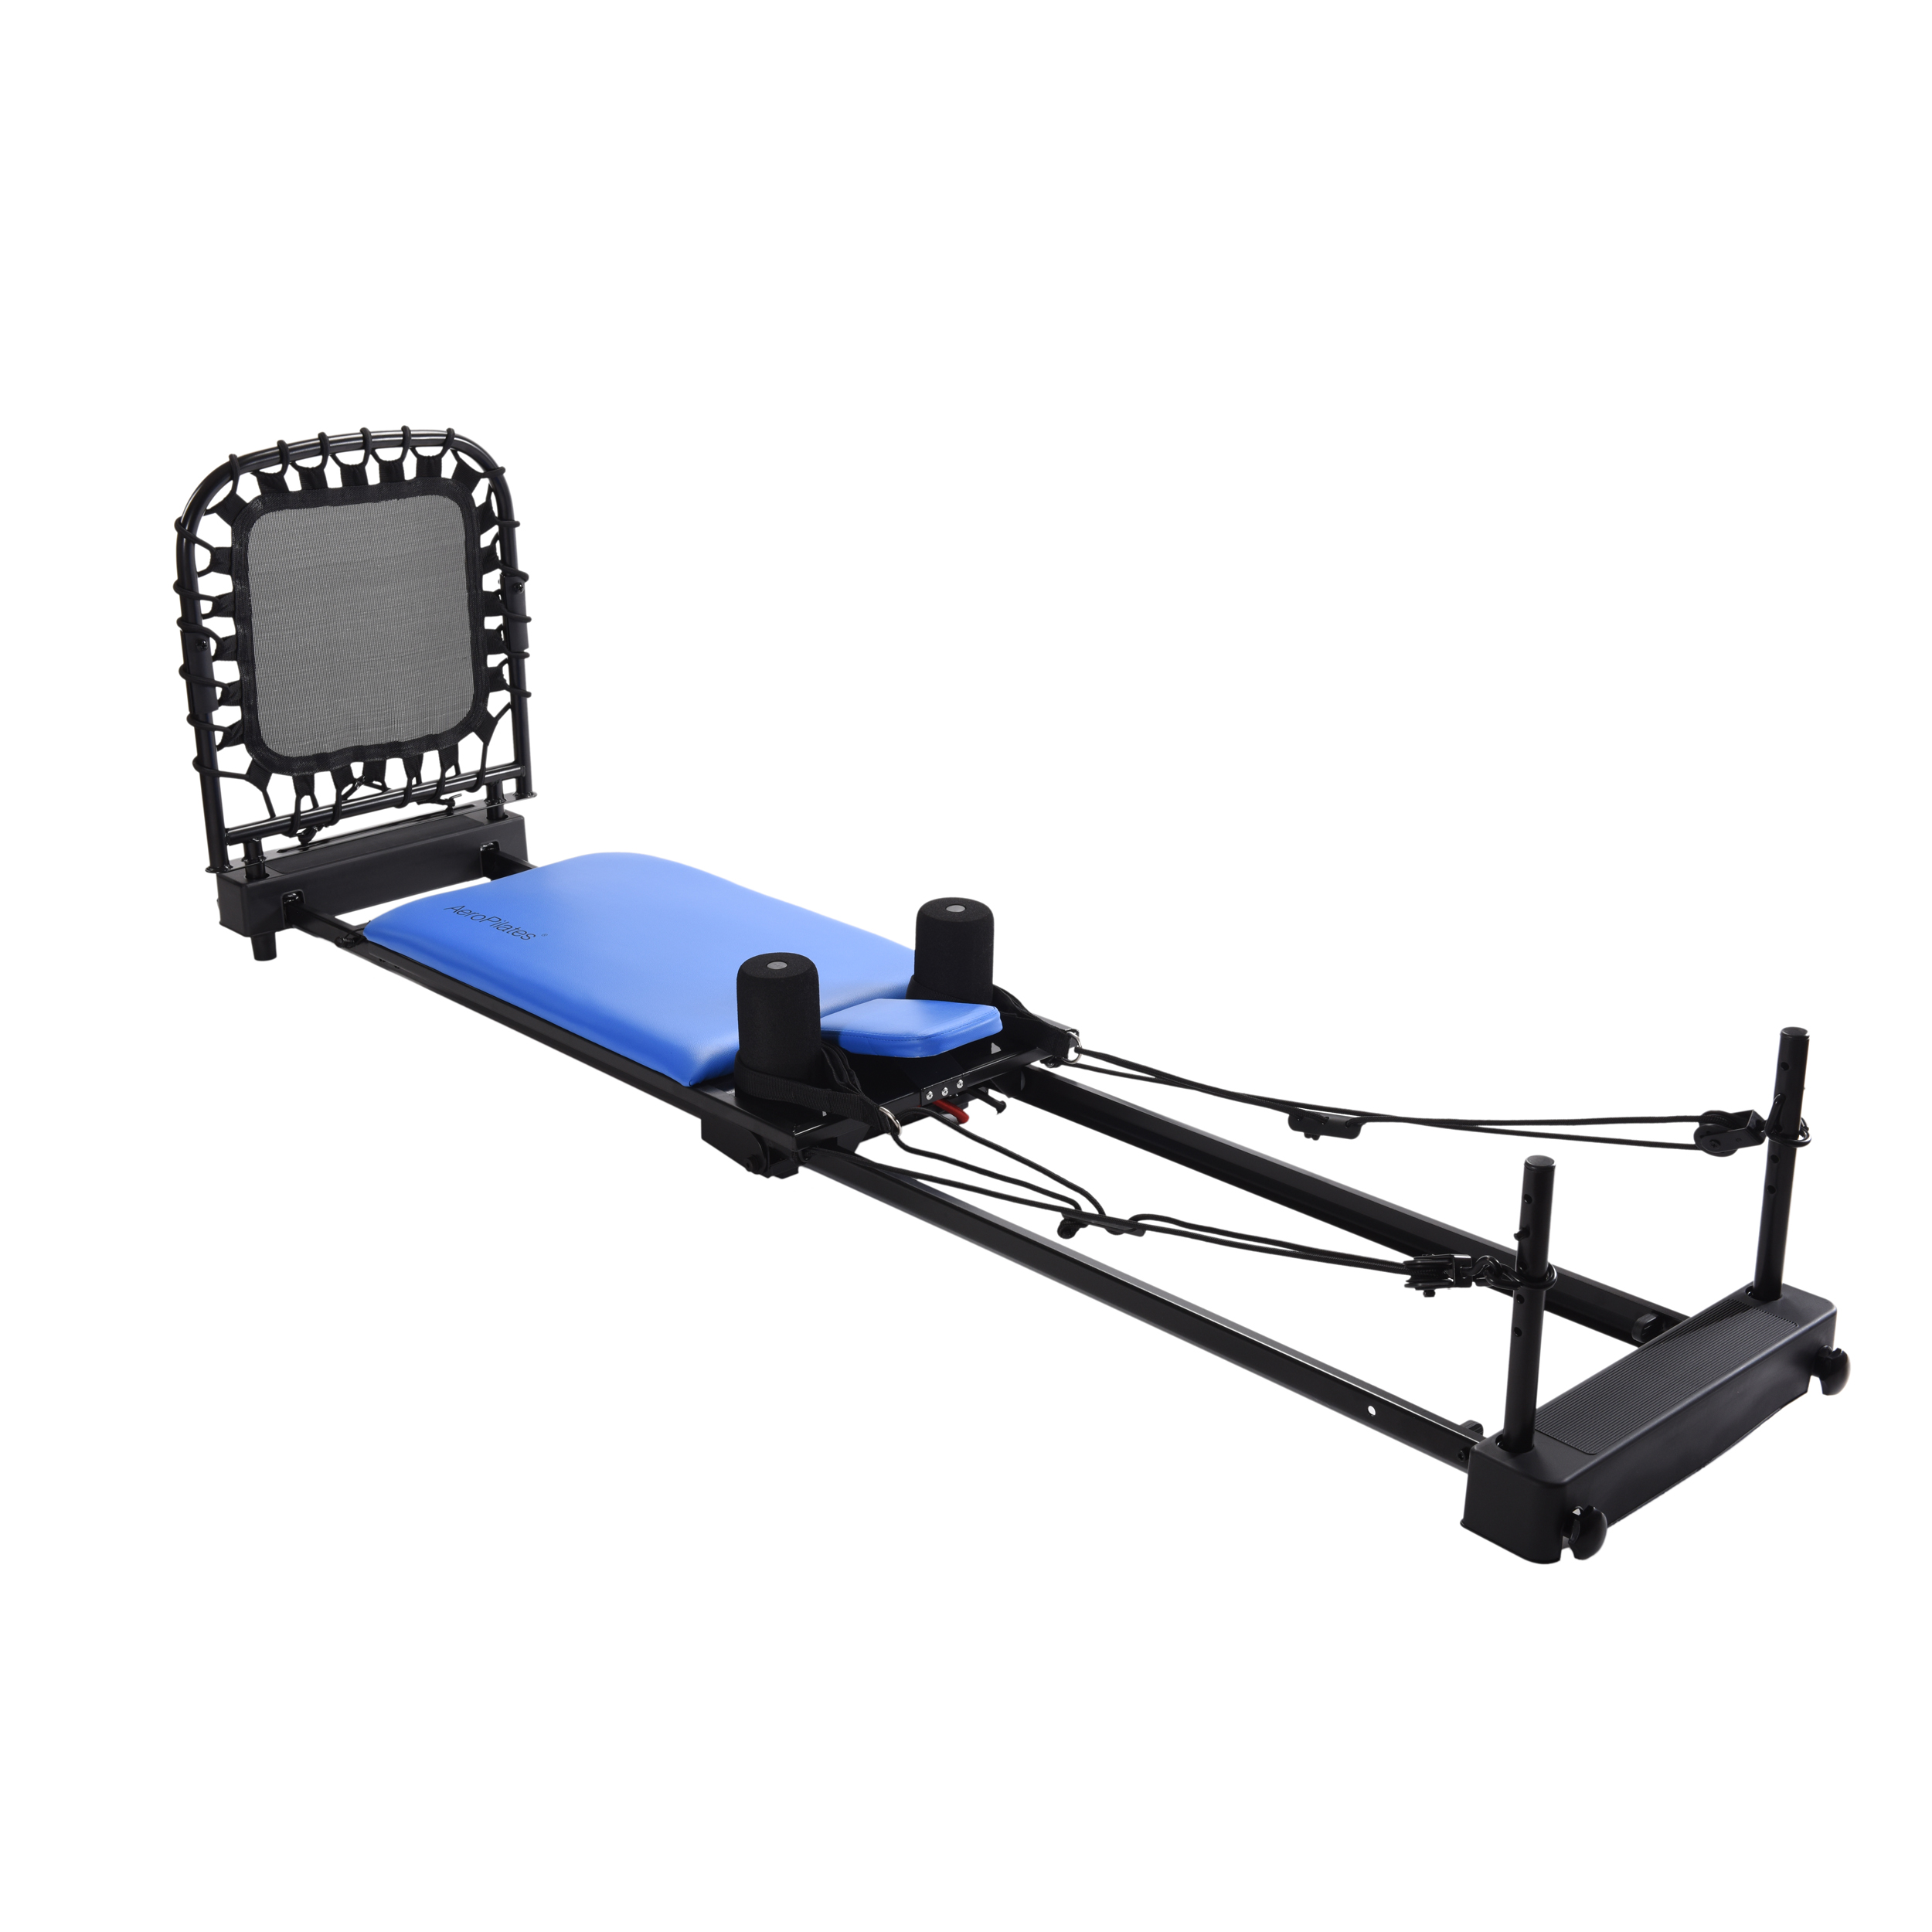 Pilates Reformer Machine for Home,Foldable Pilate for Strengh Training